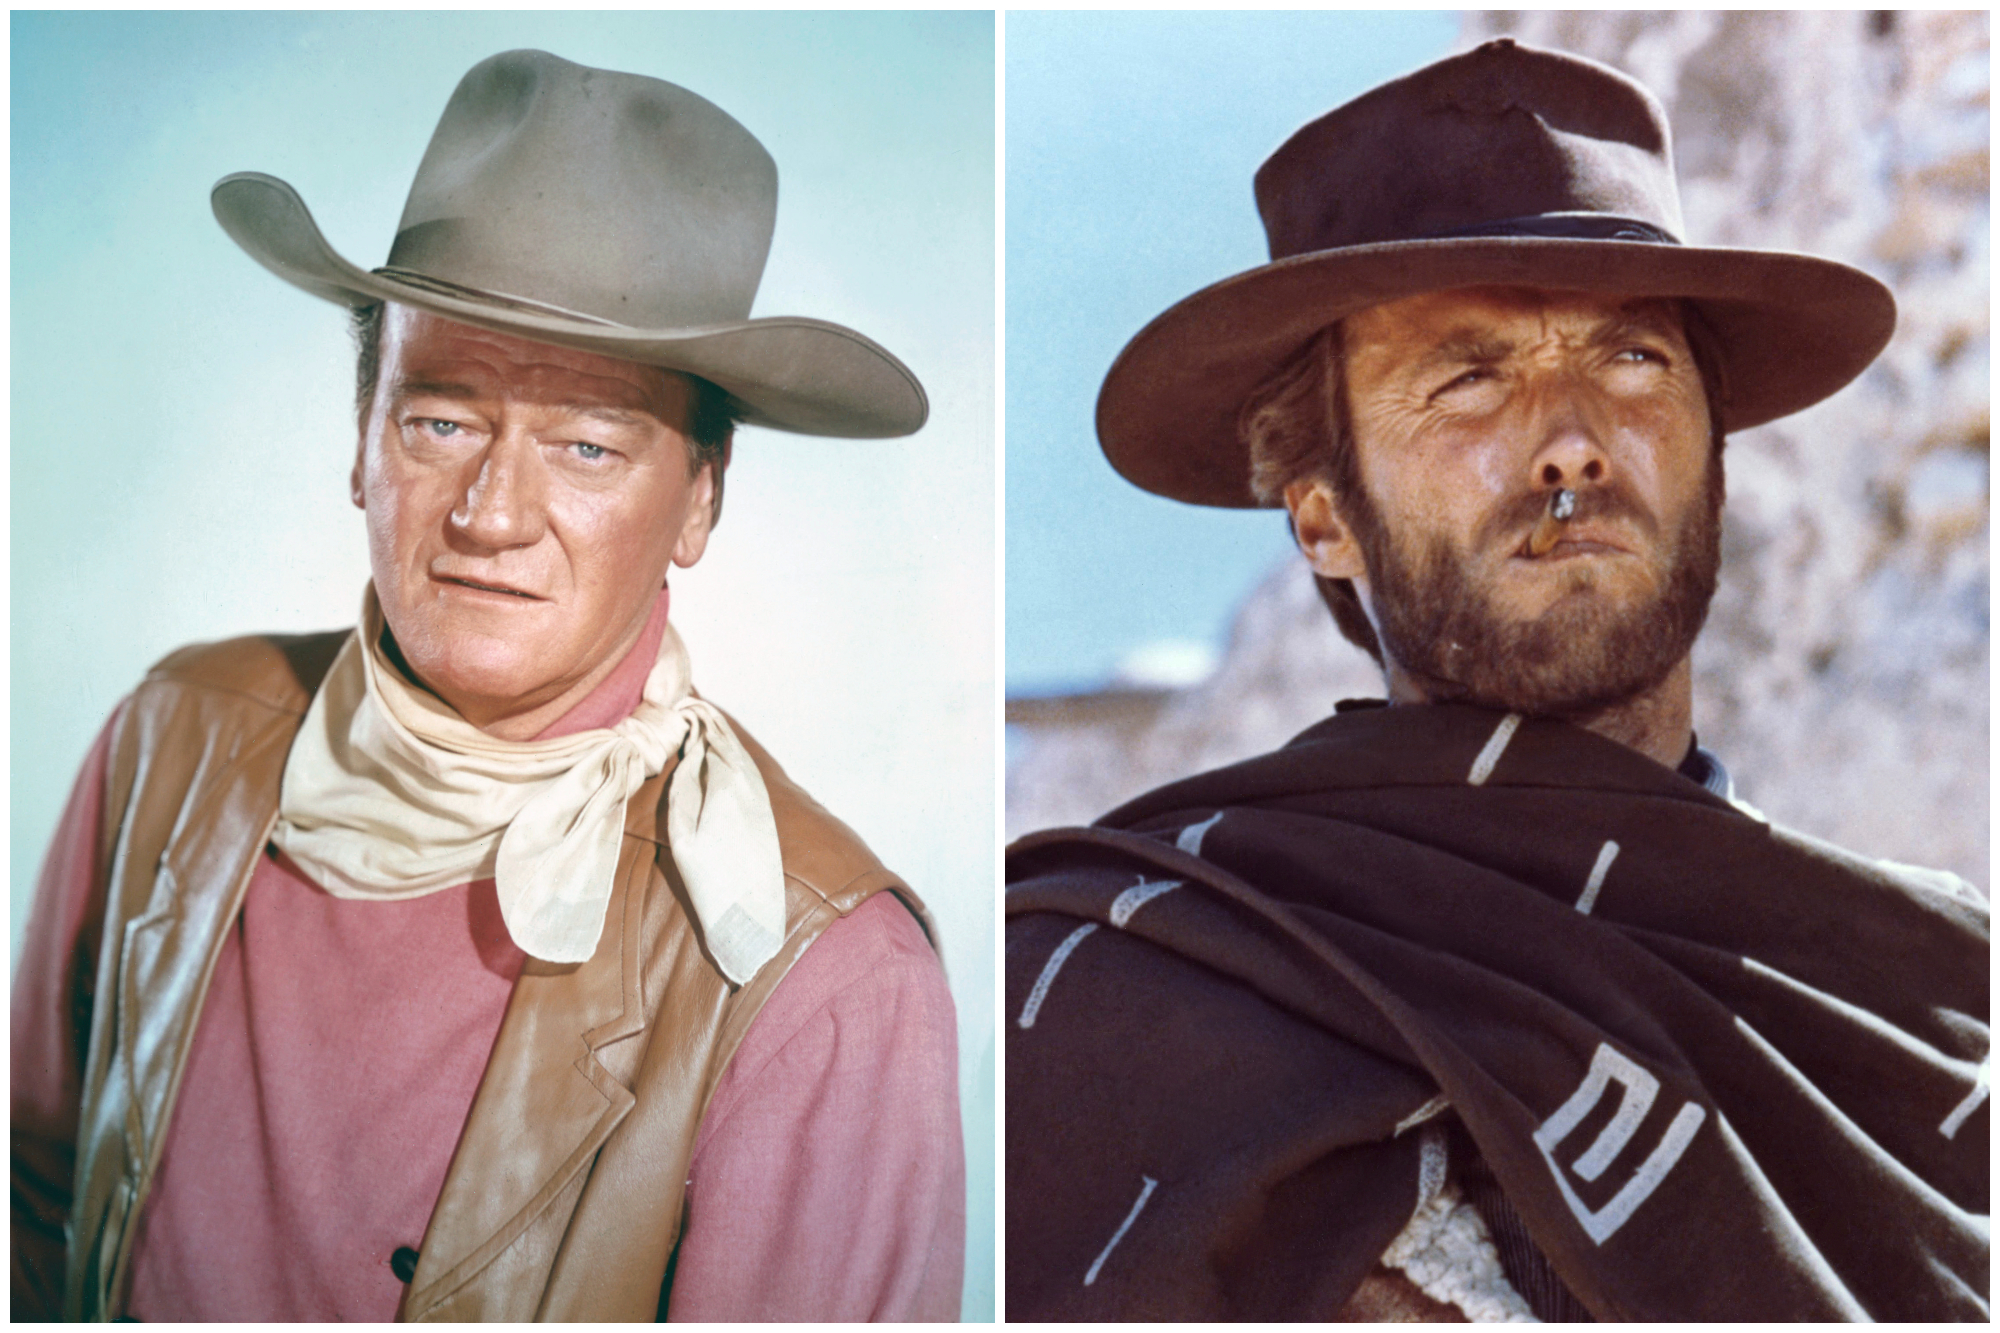 John Wayne and Clint Eastwood